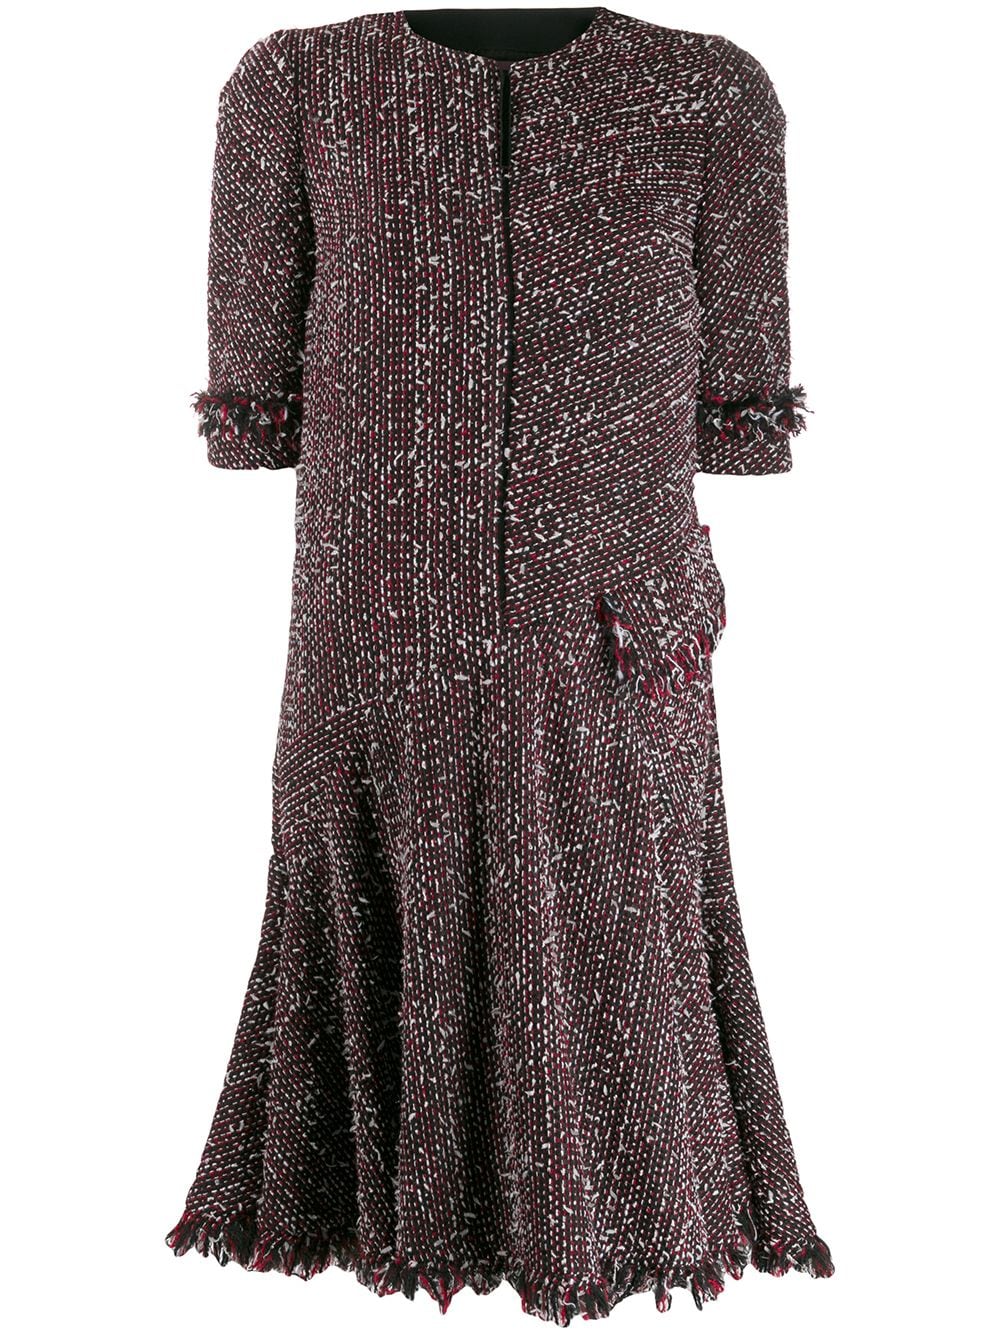 фото Talbot runhof короткое твидовое платье